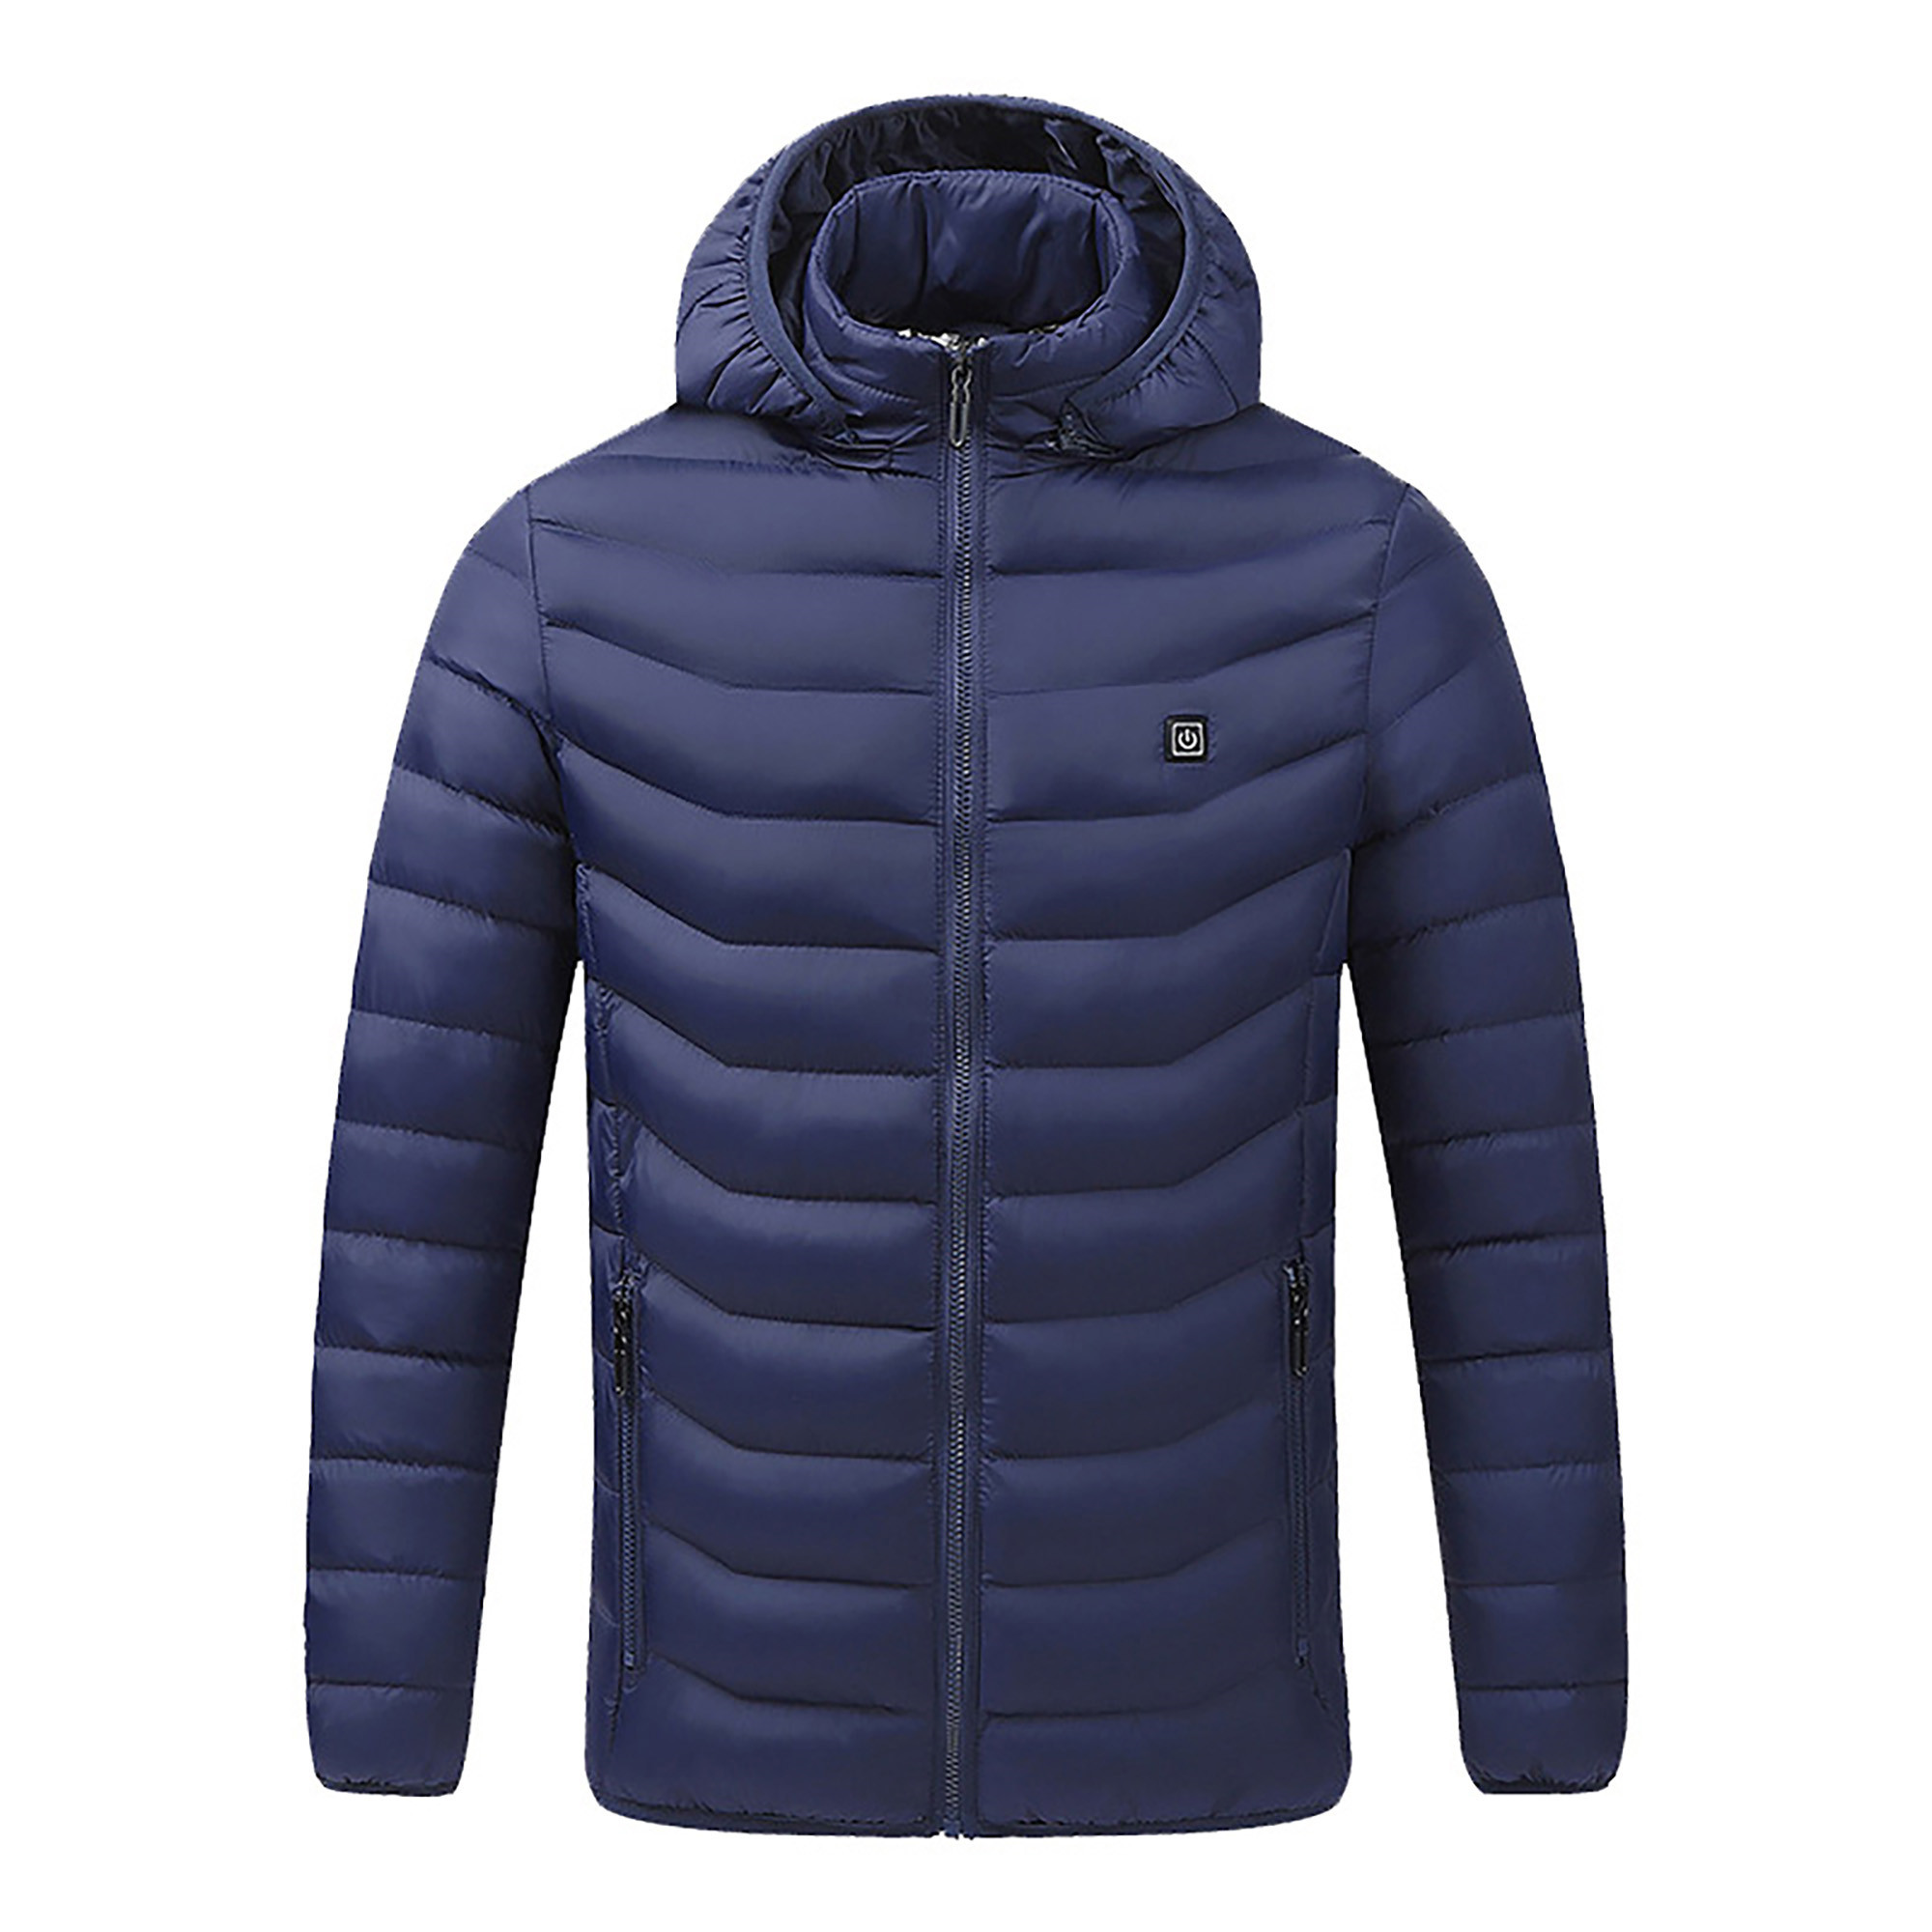 CVLIFE Men's Heated Jacket Full Zip with Detachable Hood (Power Bank is Not Included) Winter Body Warmer Unisex Women Lightweight Heating Coat Clothing - image 3 of 3